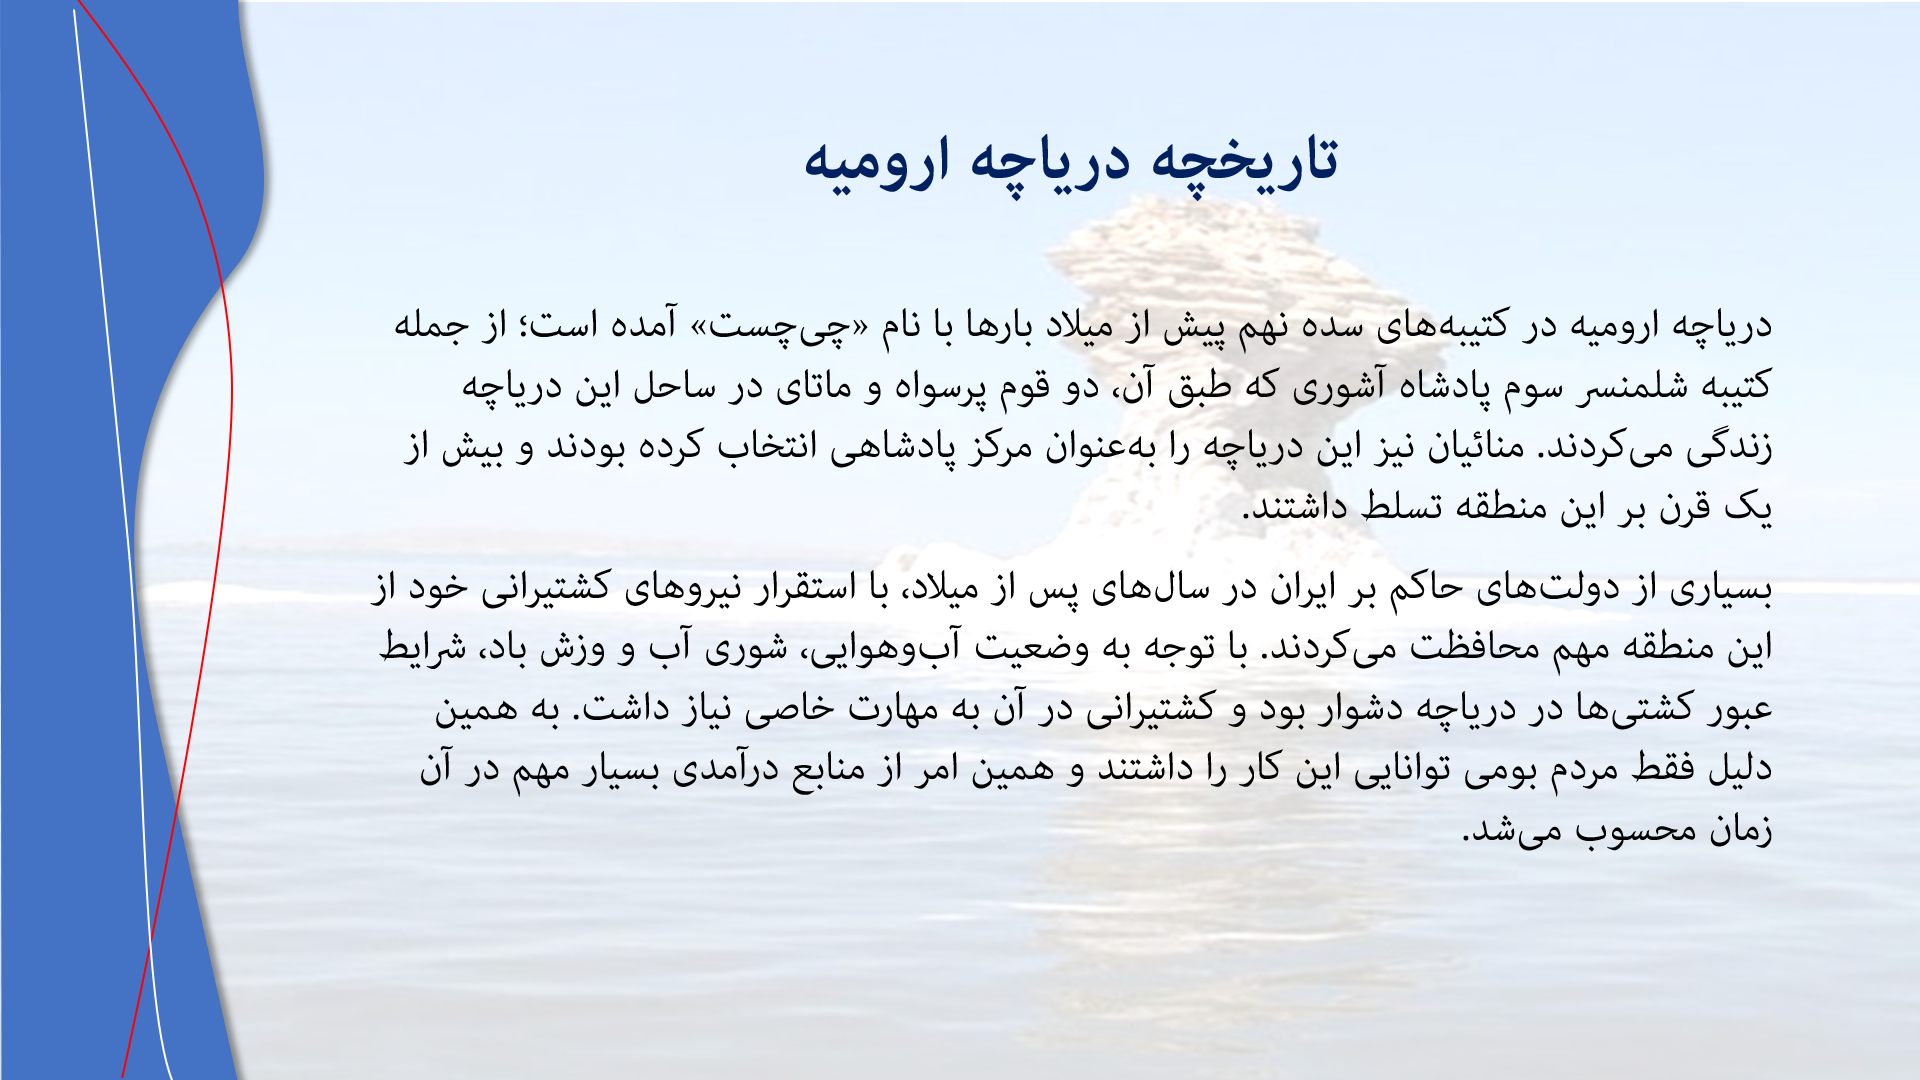 پاورپوینت در مورد دریاچه ارومیه 